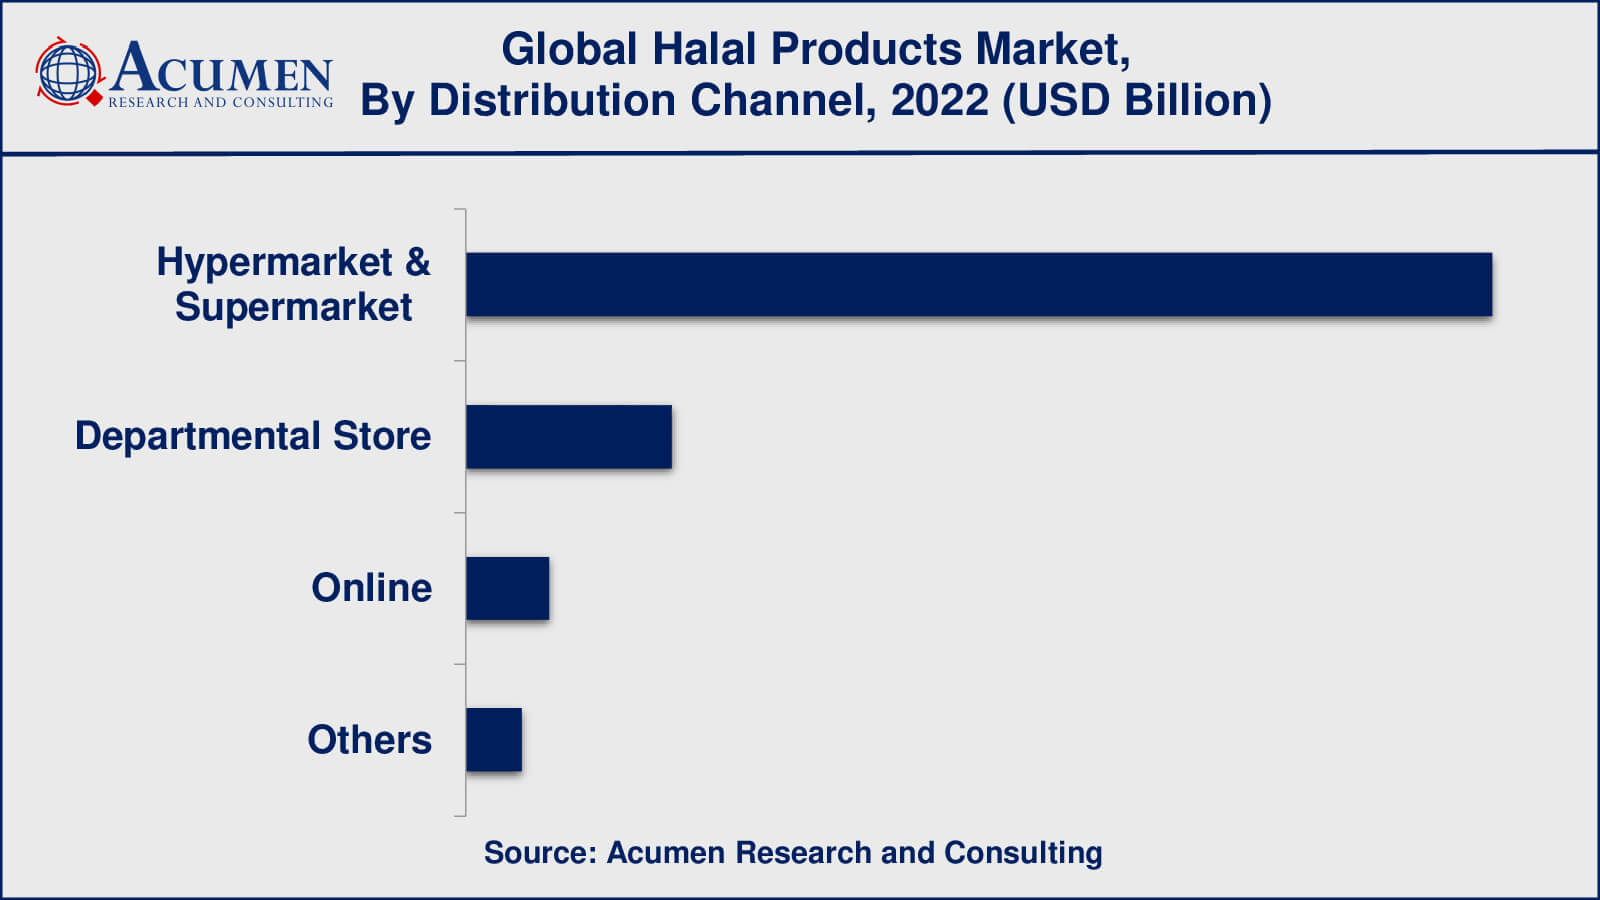 Global Halal Products Market Dynamics